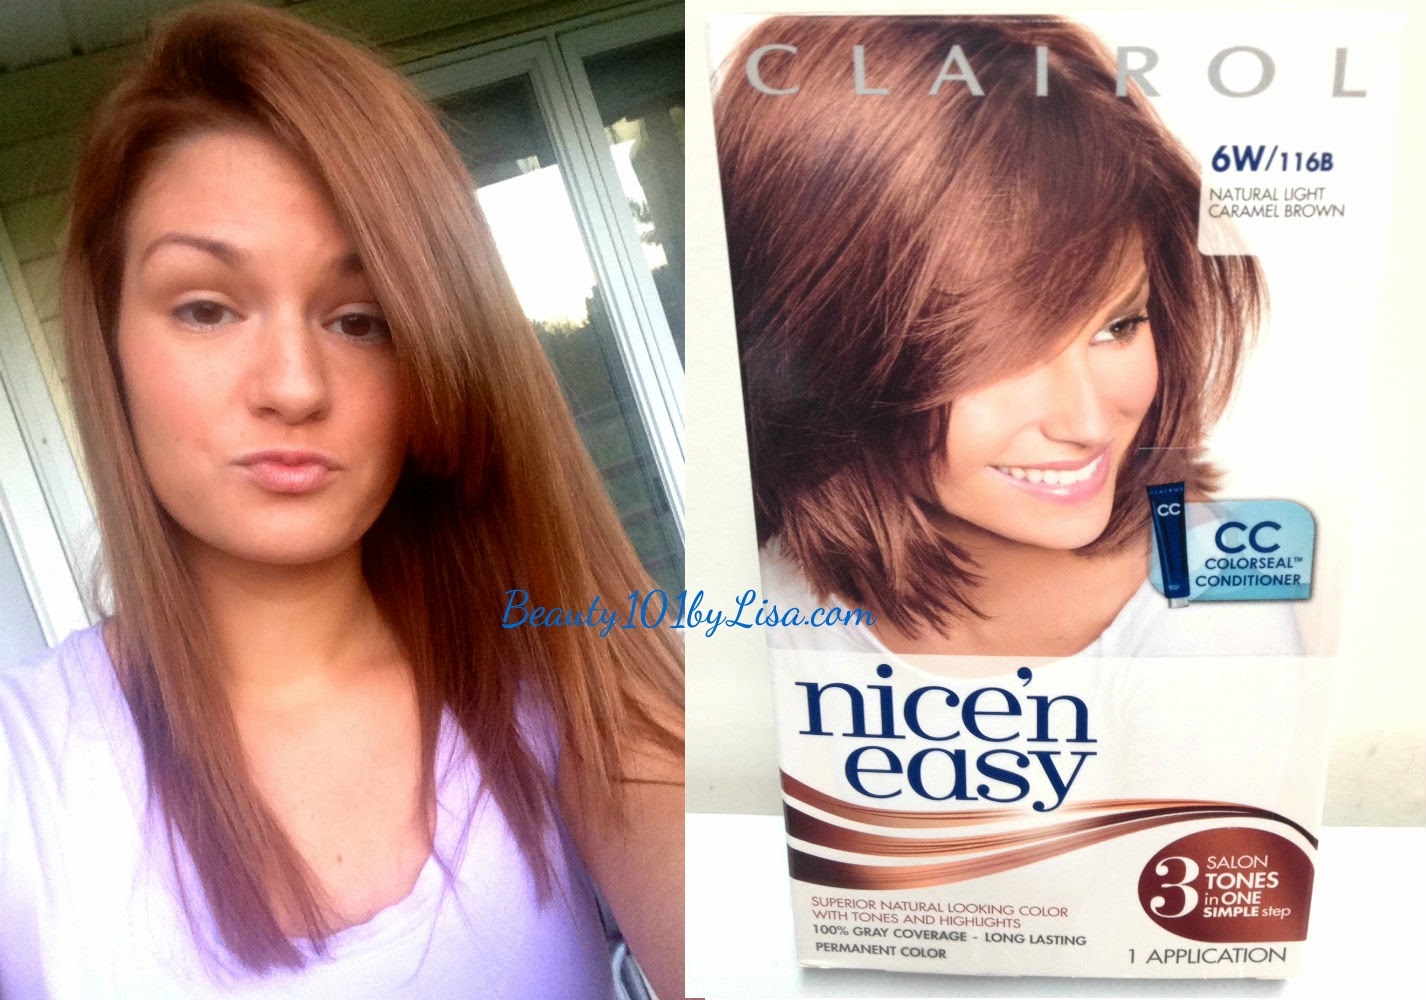 BEAUTY101BYLISA: Fall Hair Makeover - Light Caramel Brown